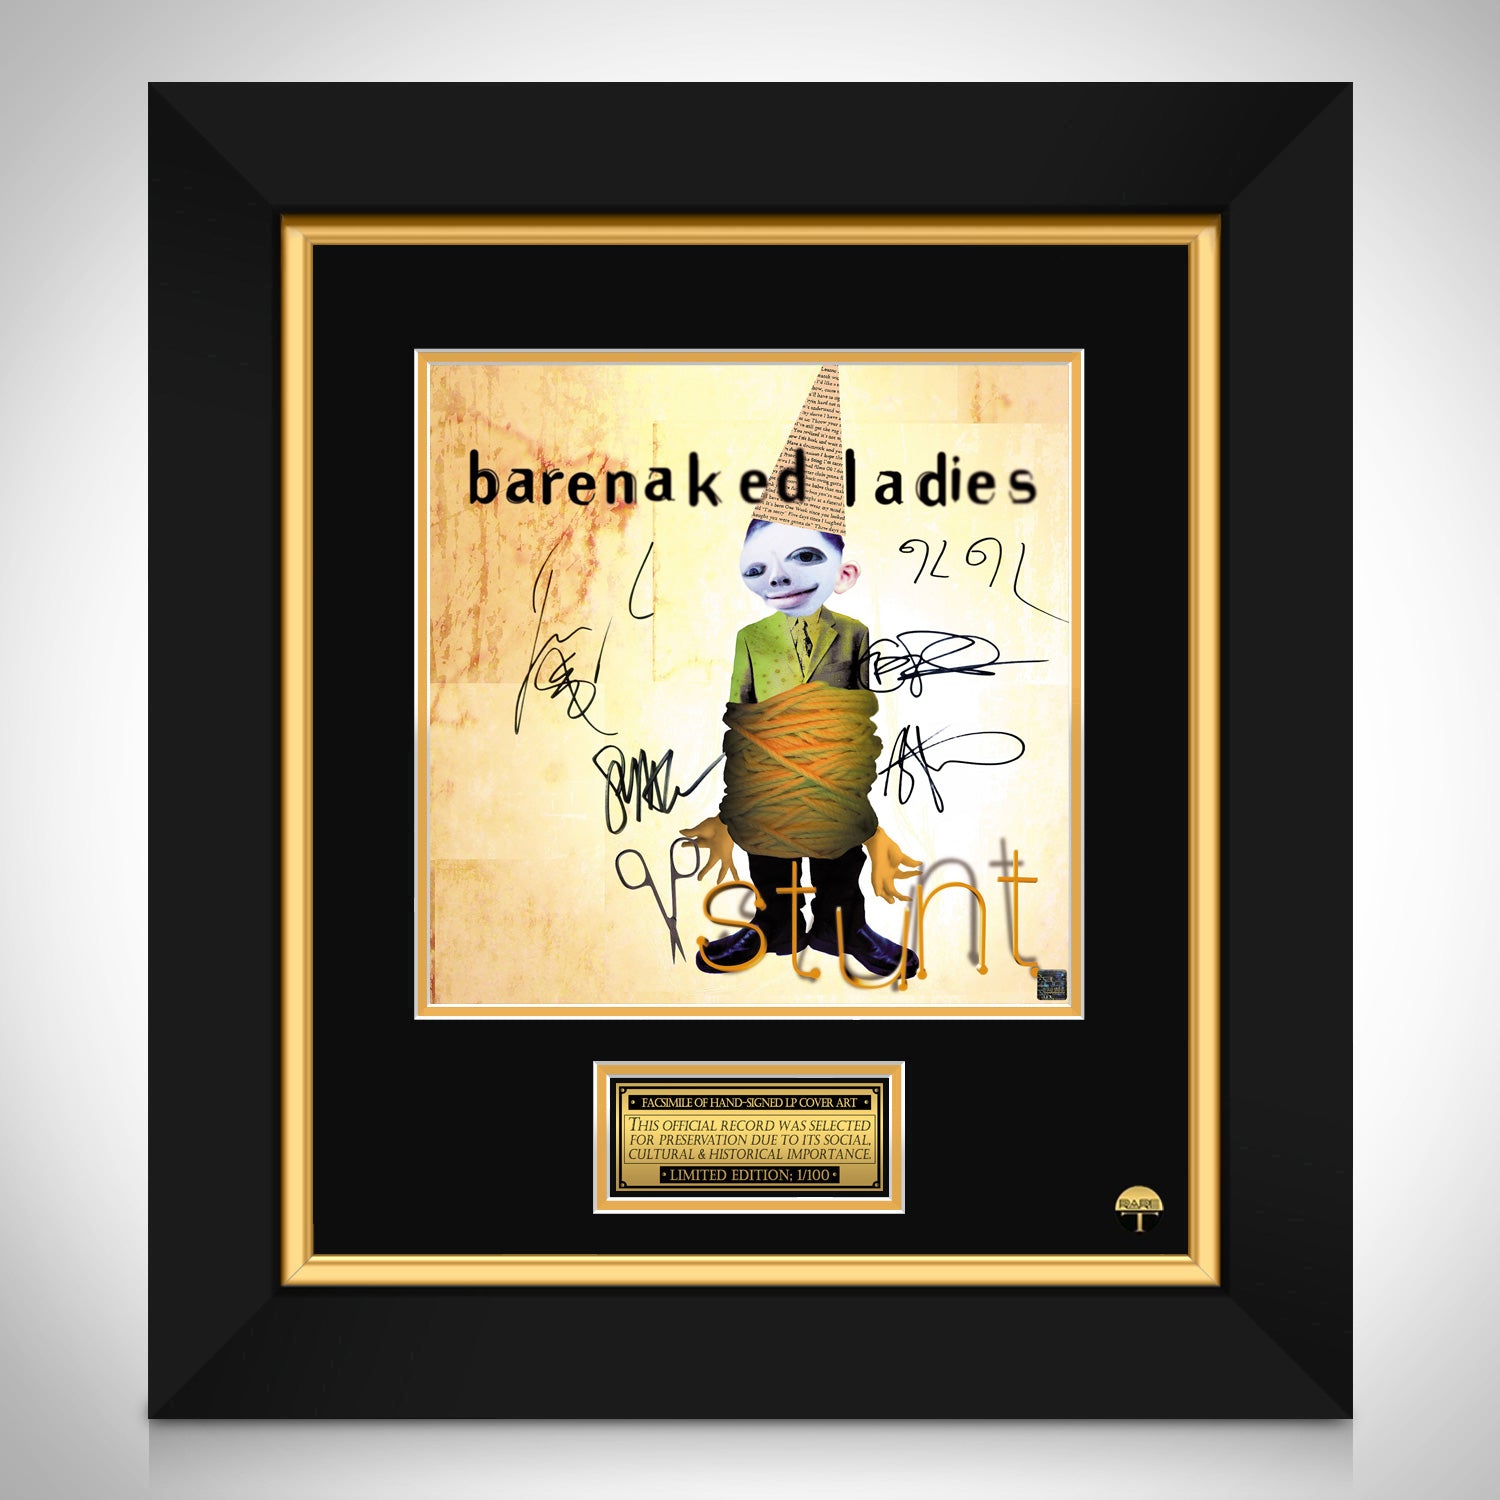 Barenaked Ladies Stunt Lp Cover Limited Signature Edition Custom Frame Rare T